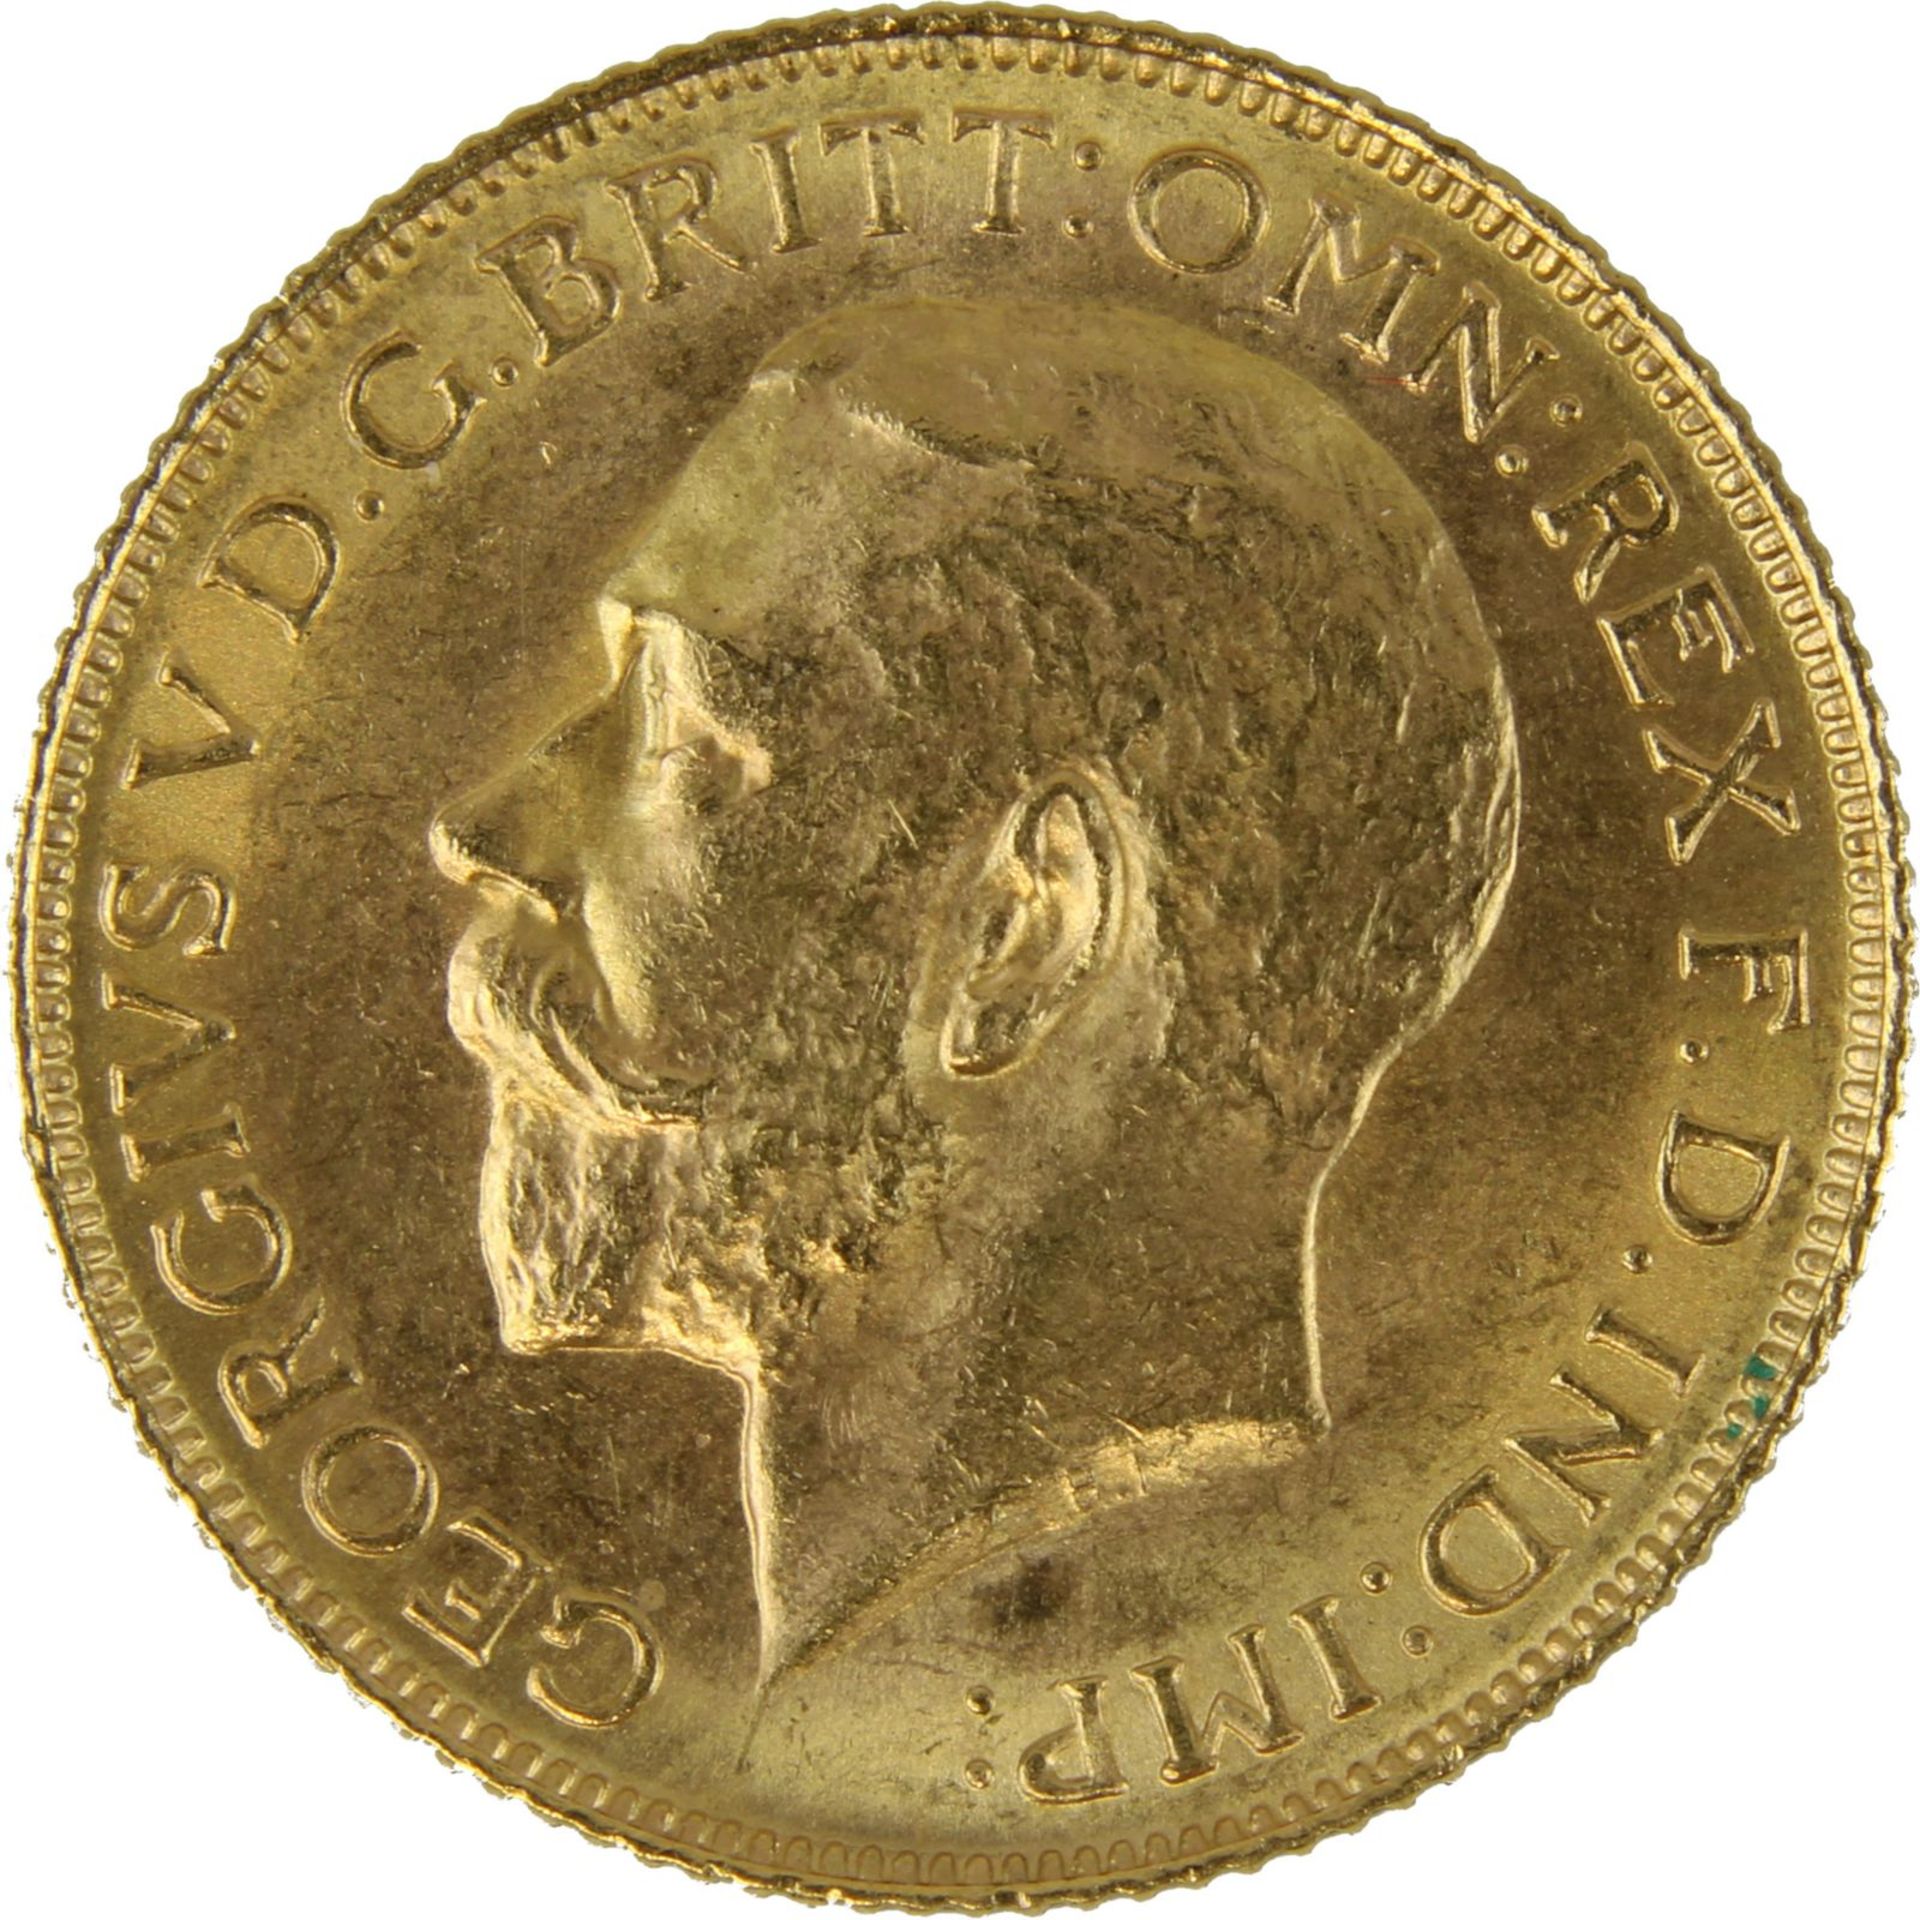 Goldmünze zu 1 Souvereign, England 1925, Avers: Kopf King George V nach links u. Umschrift, - Image 2 of 3